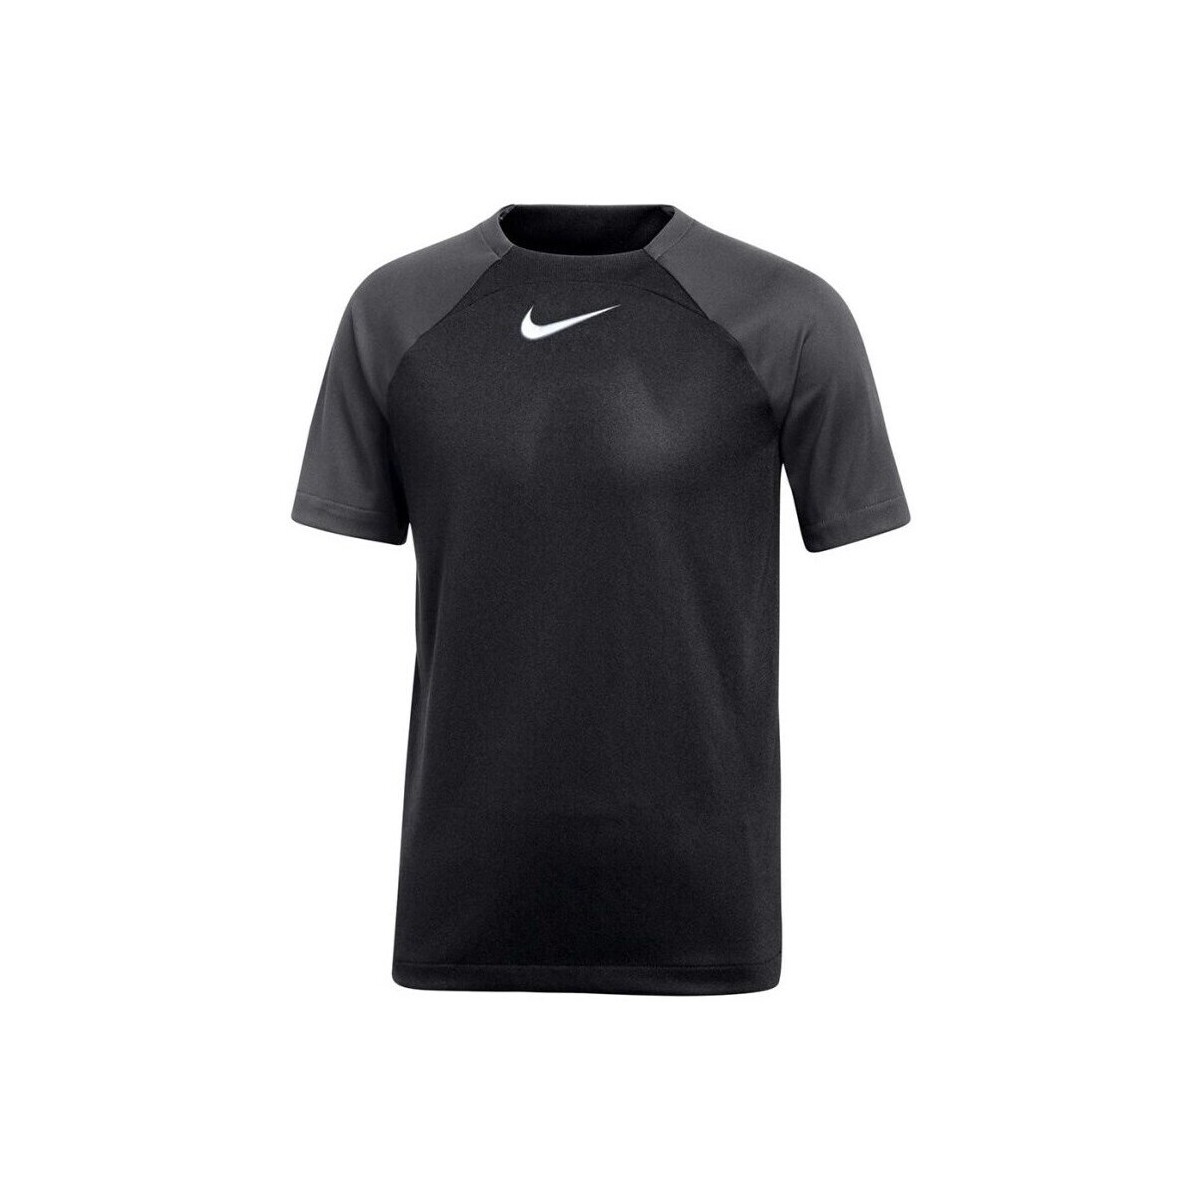 Kleidung Jungen T-Shirts Nike DF Academy Pro JR Schwarz